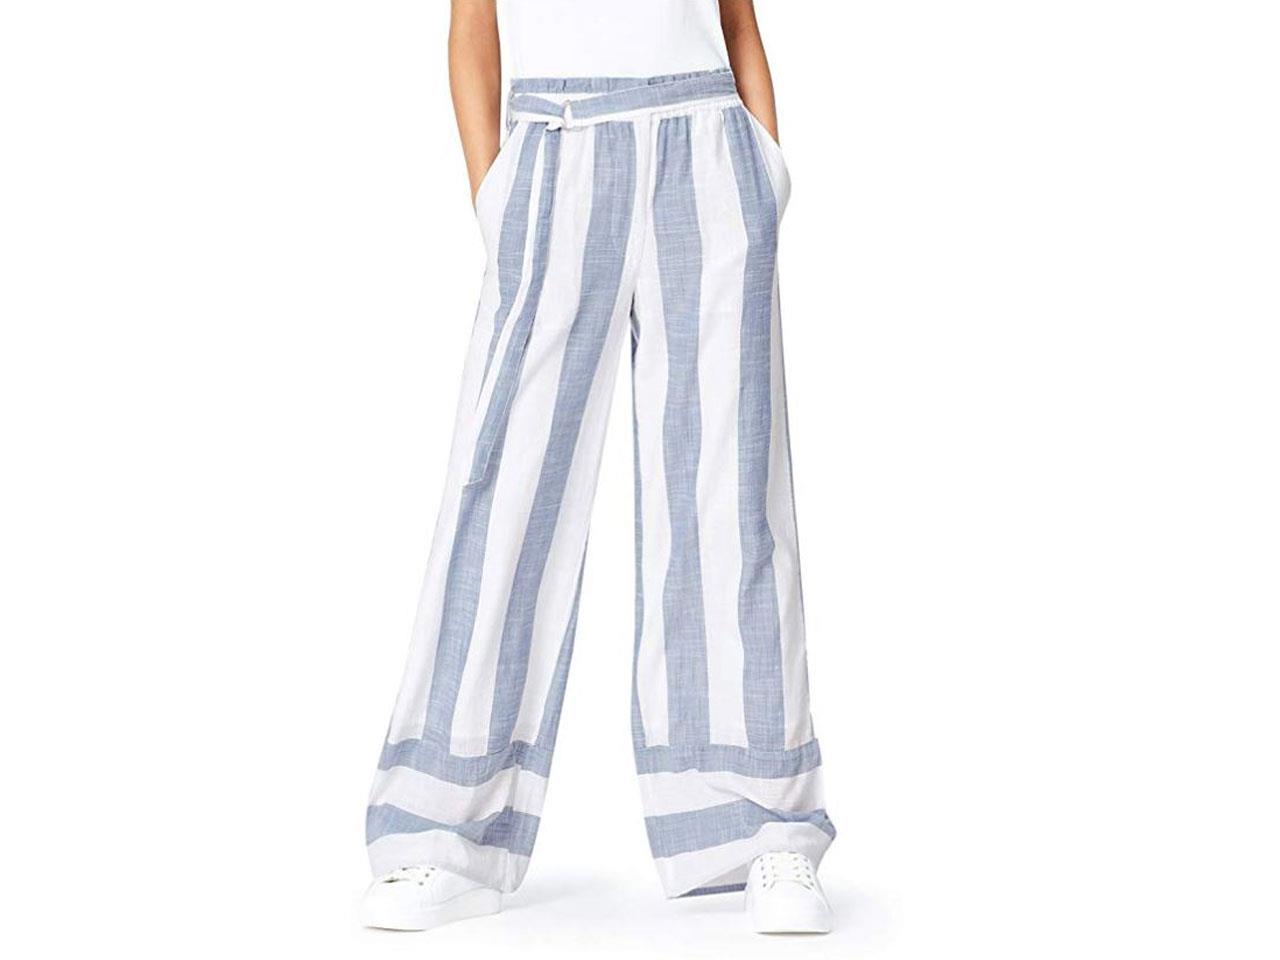 amazon prime day 2019 pantalones Amazon Find., c.p.v. (antes 27,00€)